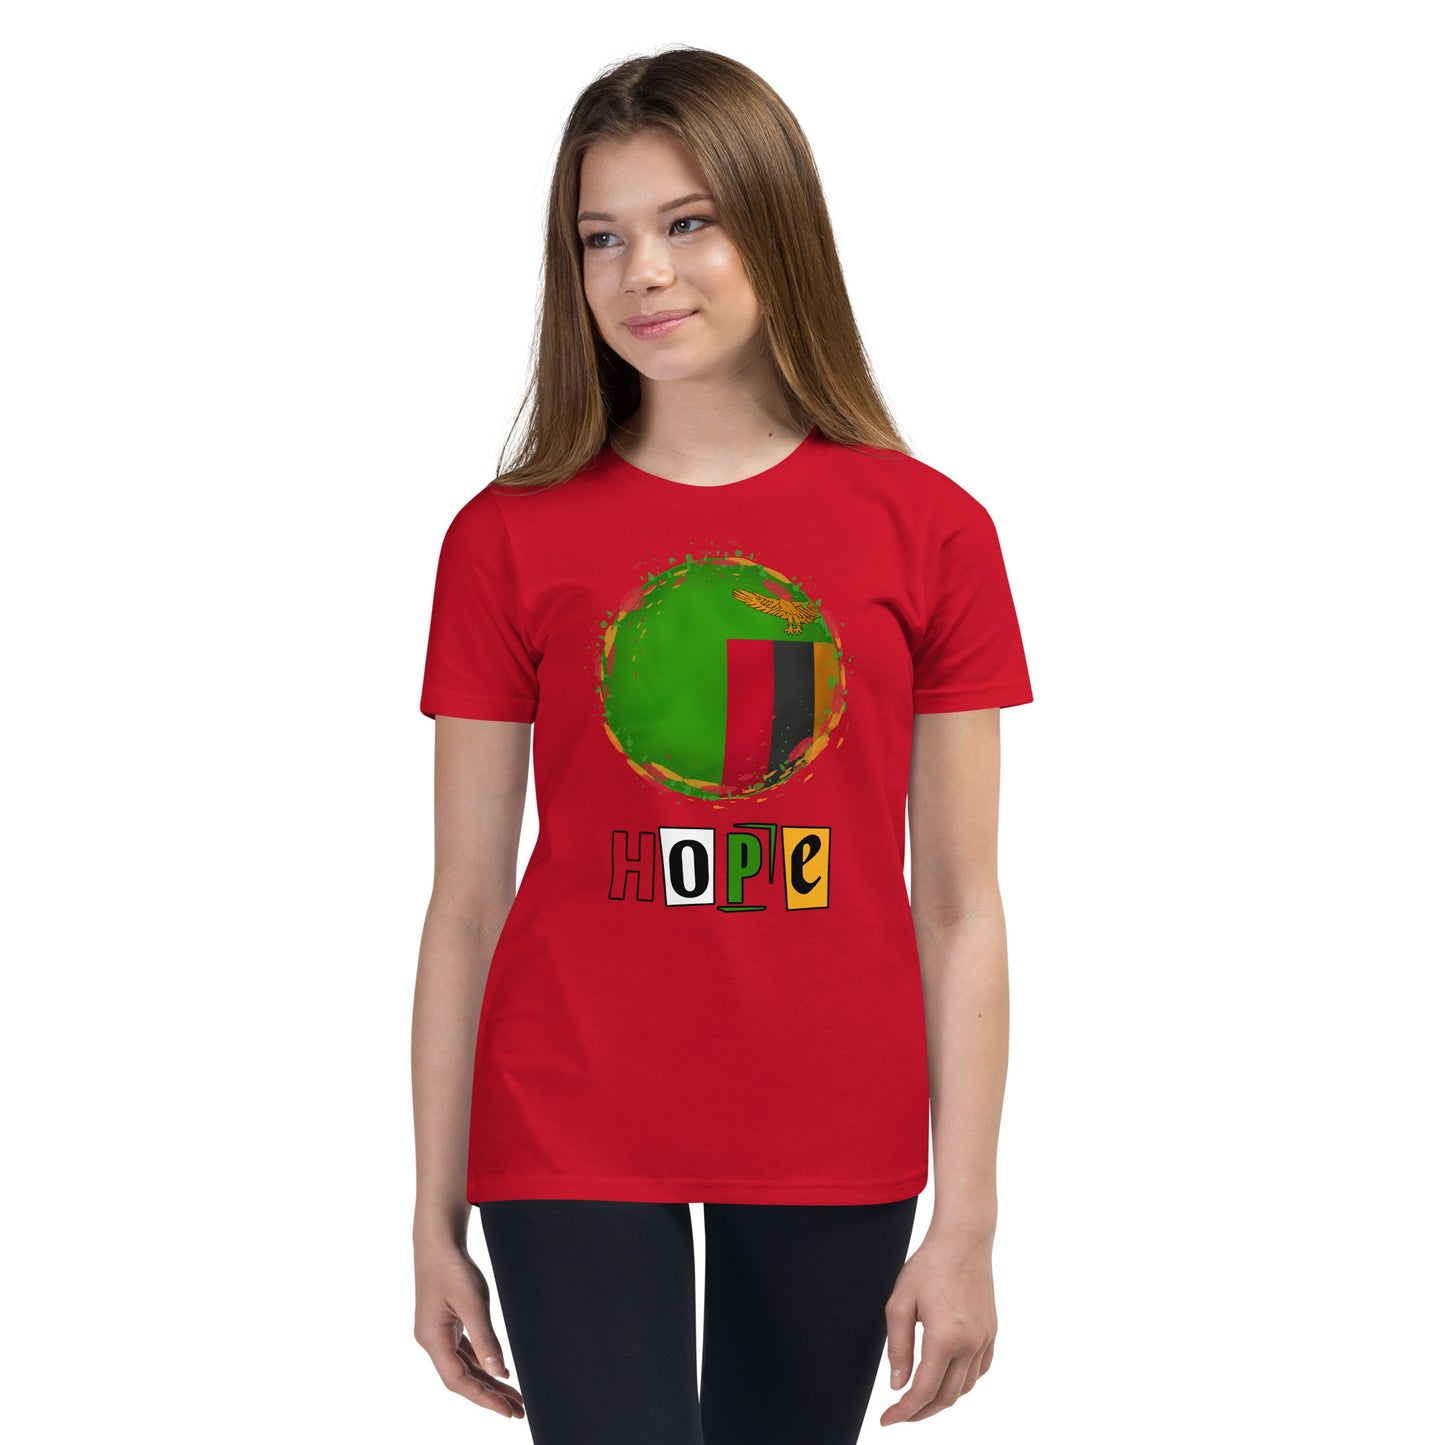 Youth Short Sleeve Zambia Hope T-Shirt